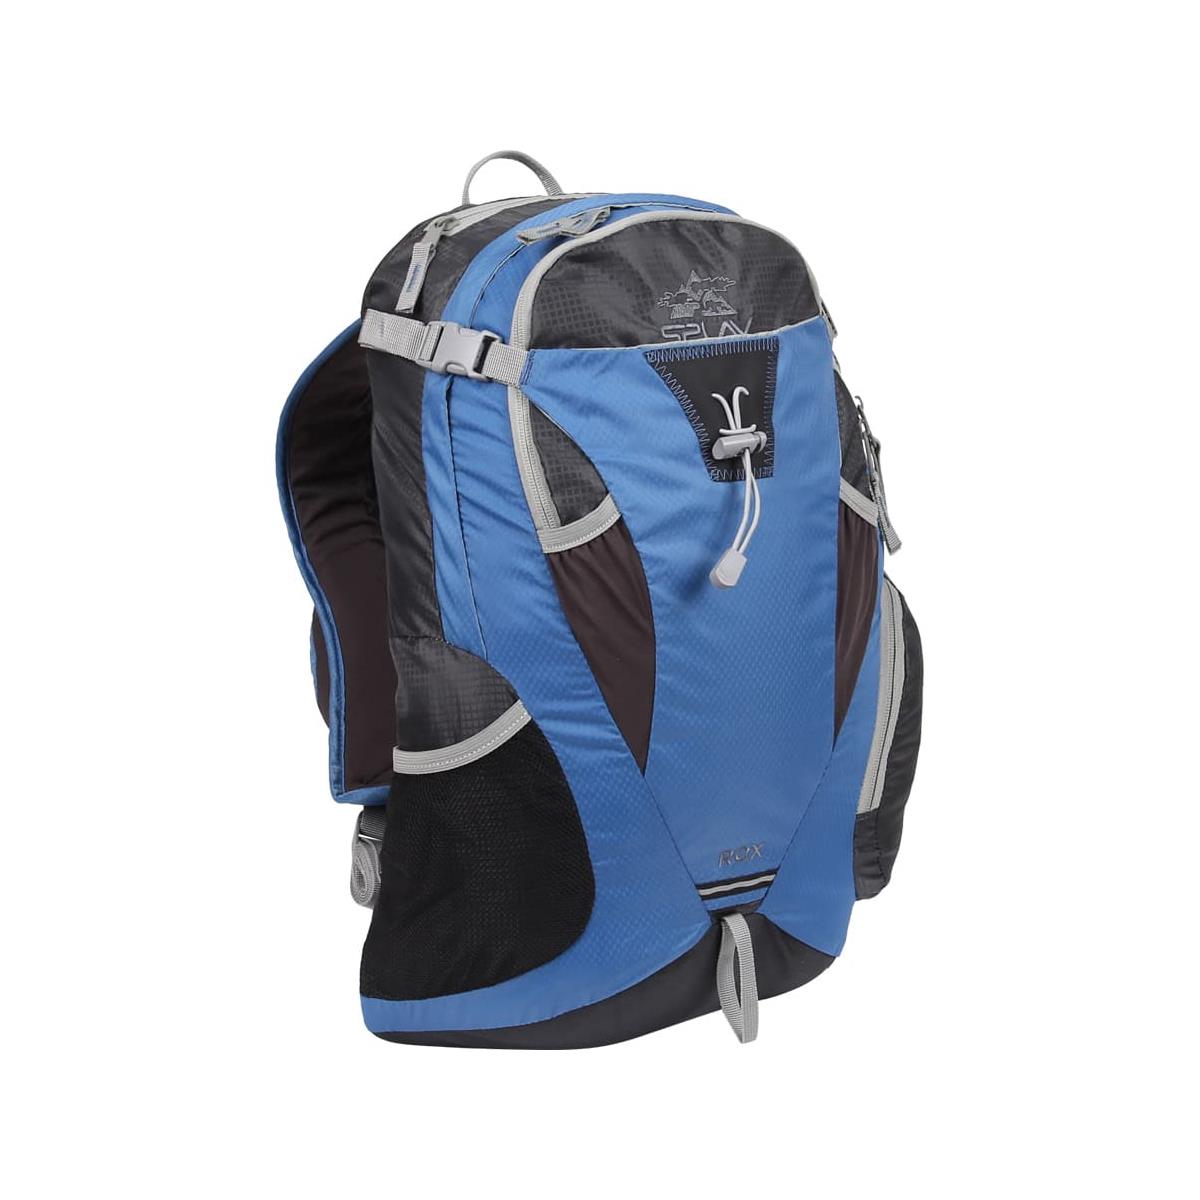 Рюкзак Rox синий СПЛАВ рюкзак молодежный